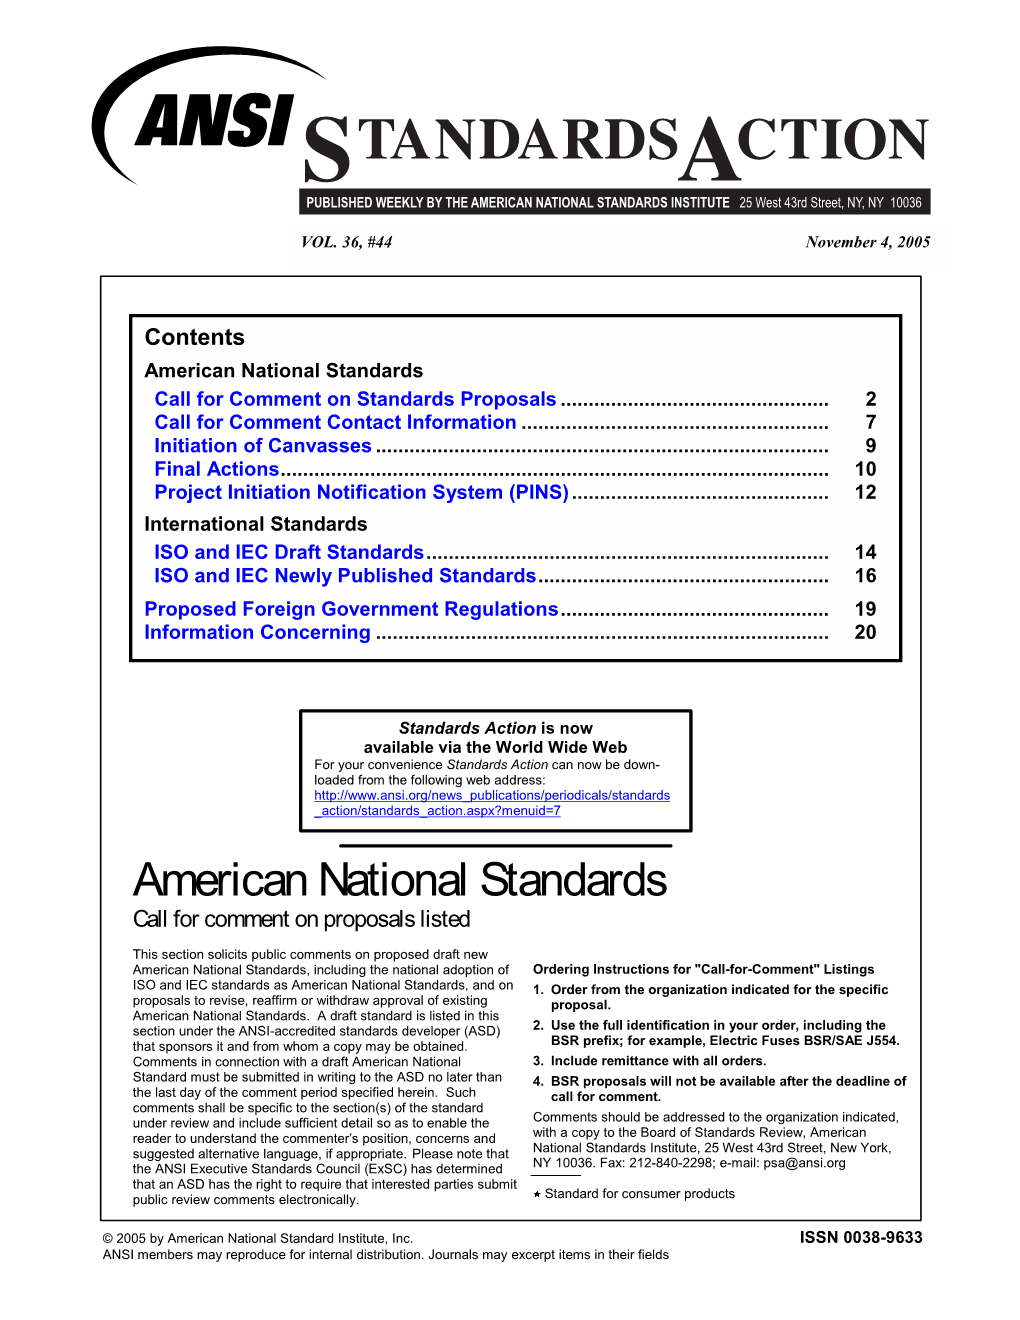 Standards Action Layout SAV3644.Fp5